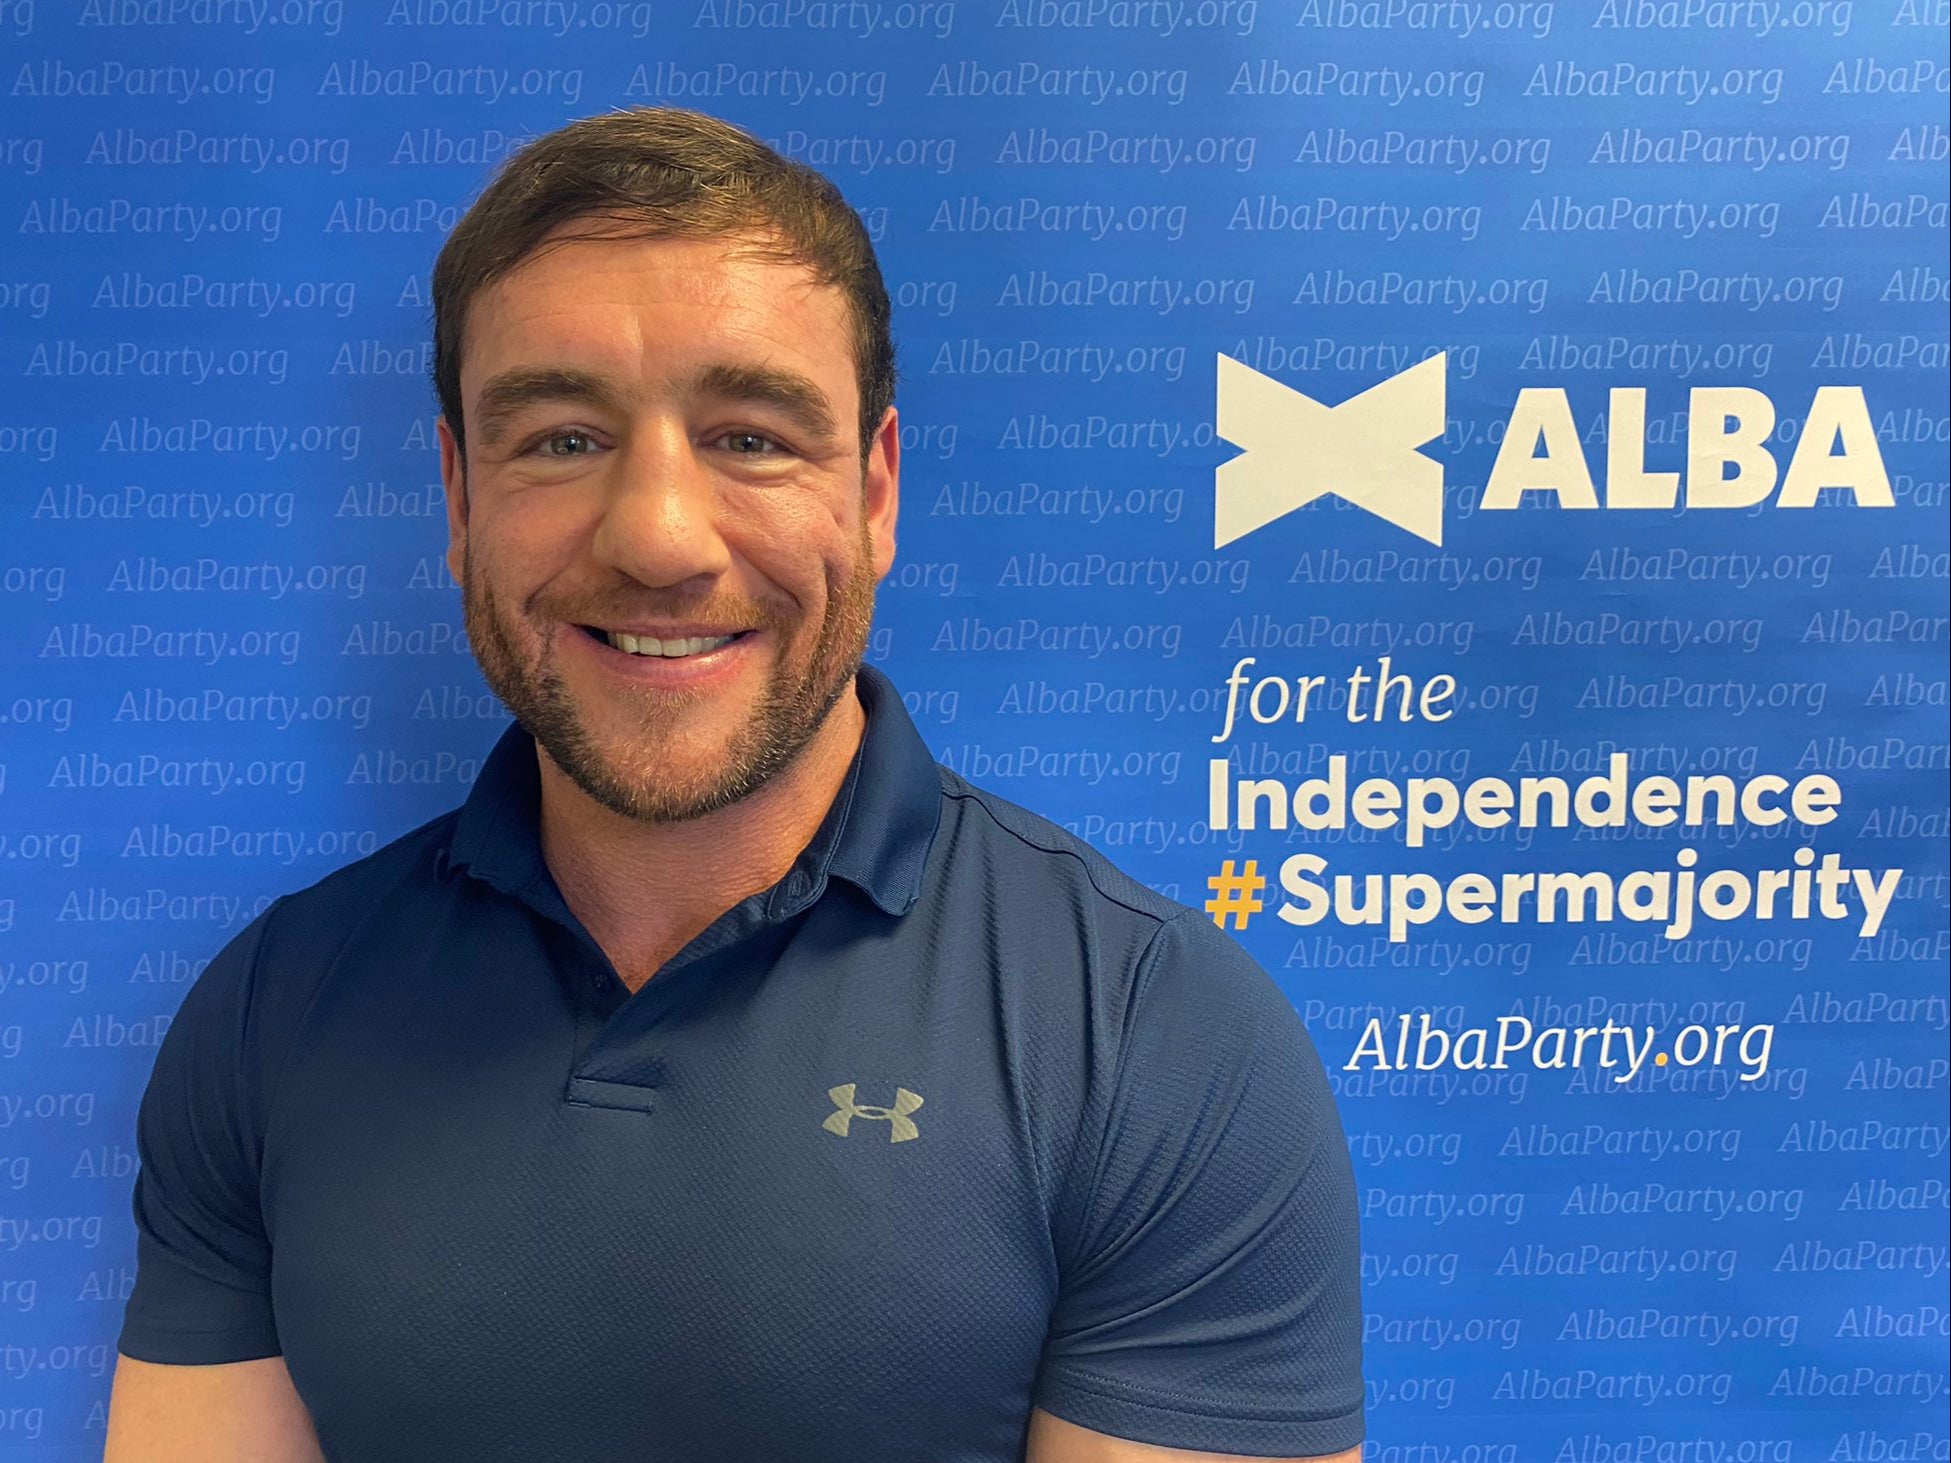 Alba Party candidate Alex Arthur